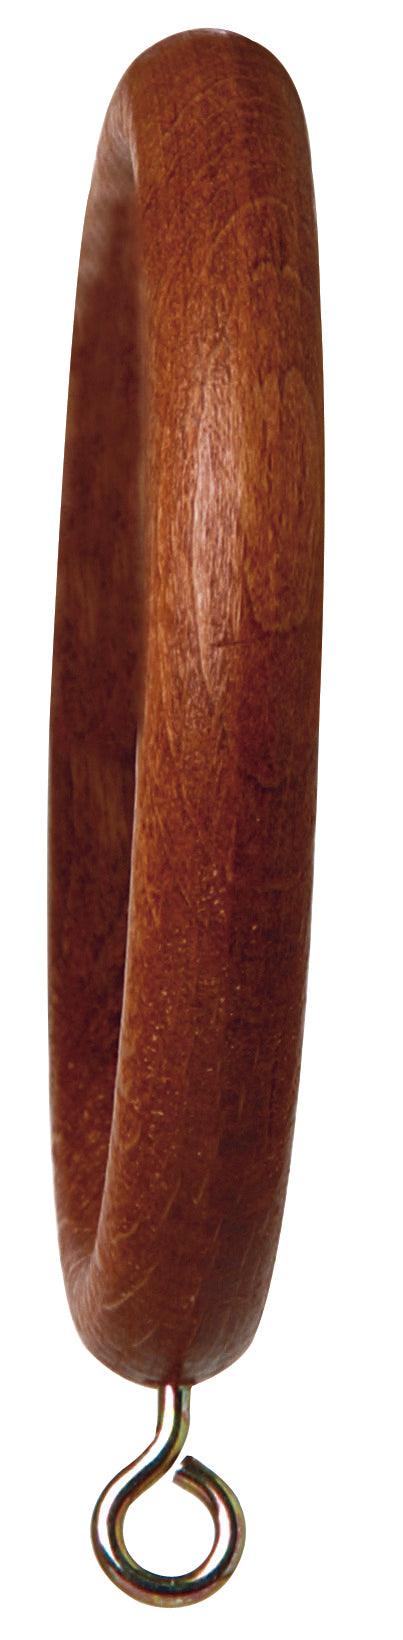 Ring Wood w/eye B 1-3/16" - Alan Richard Textiles, LTD Zabala 1-3/16" 2000 Wood & Maderas Wood